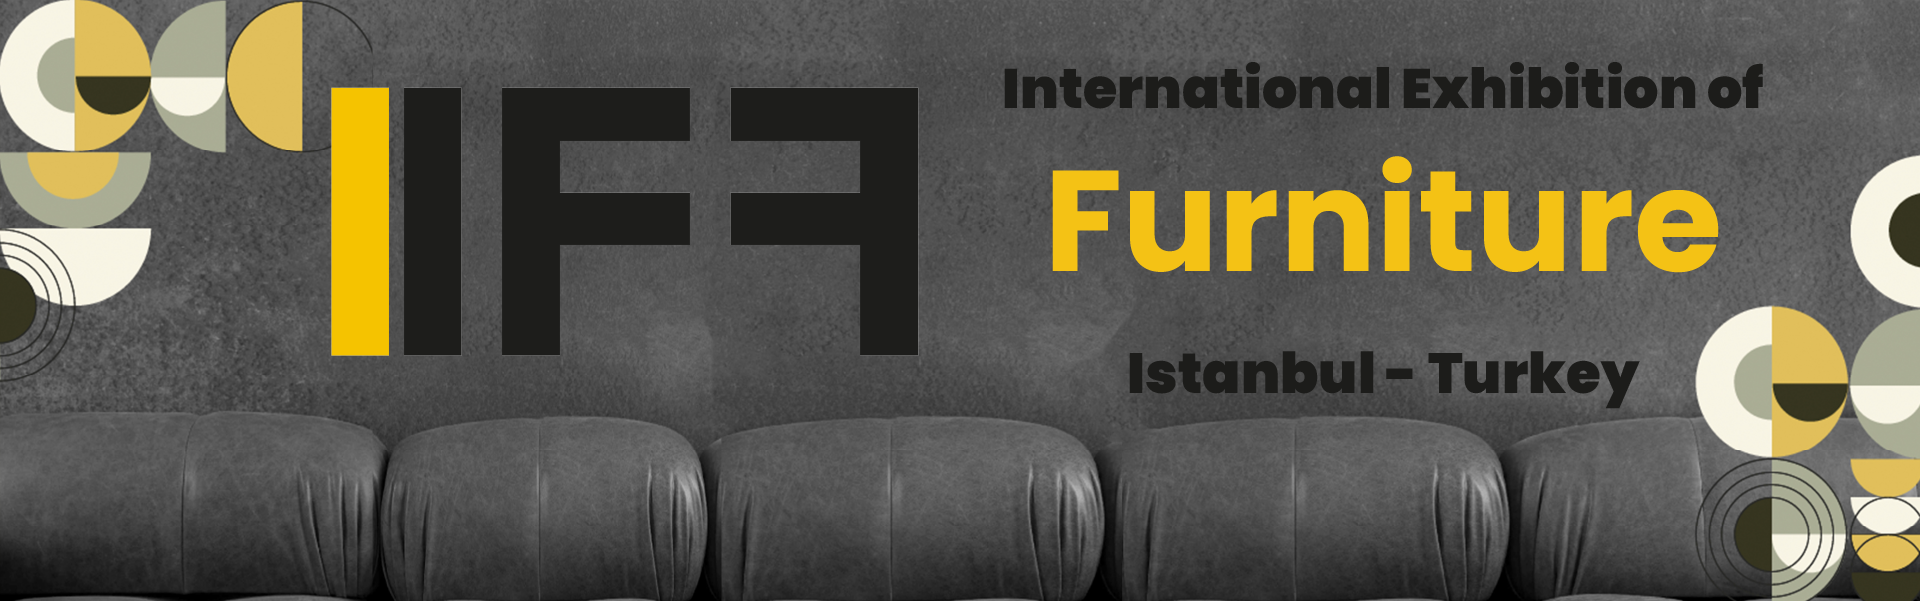 Furniture Fair Exhibition Istanbul Turkey